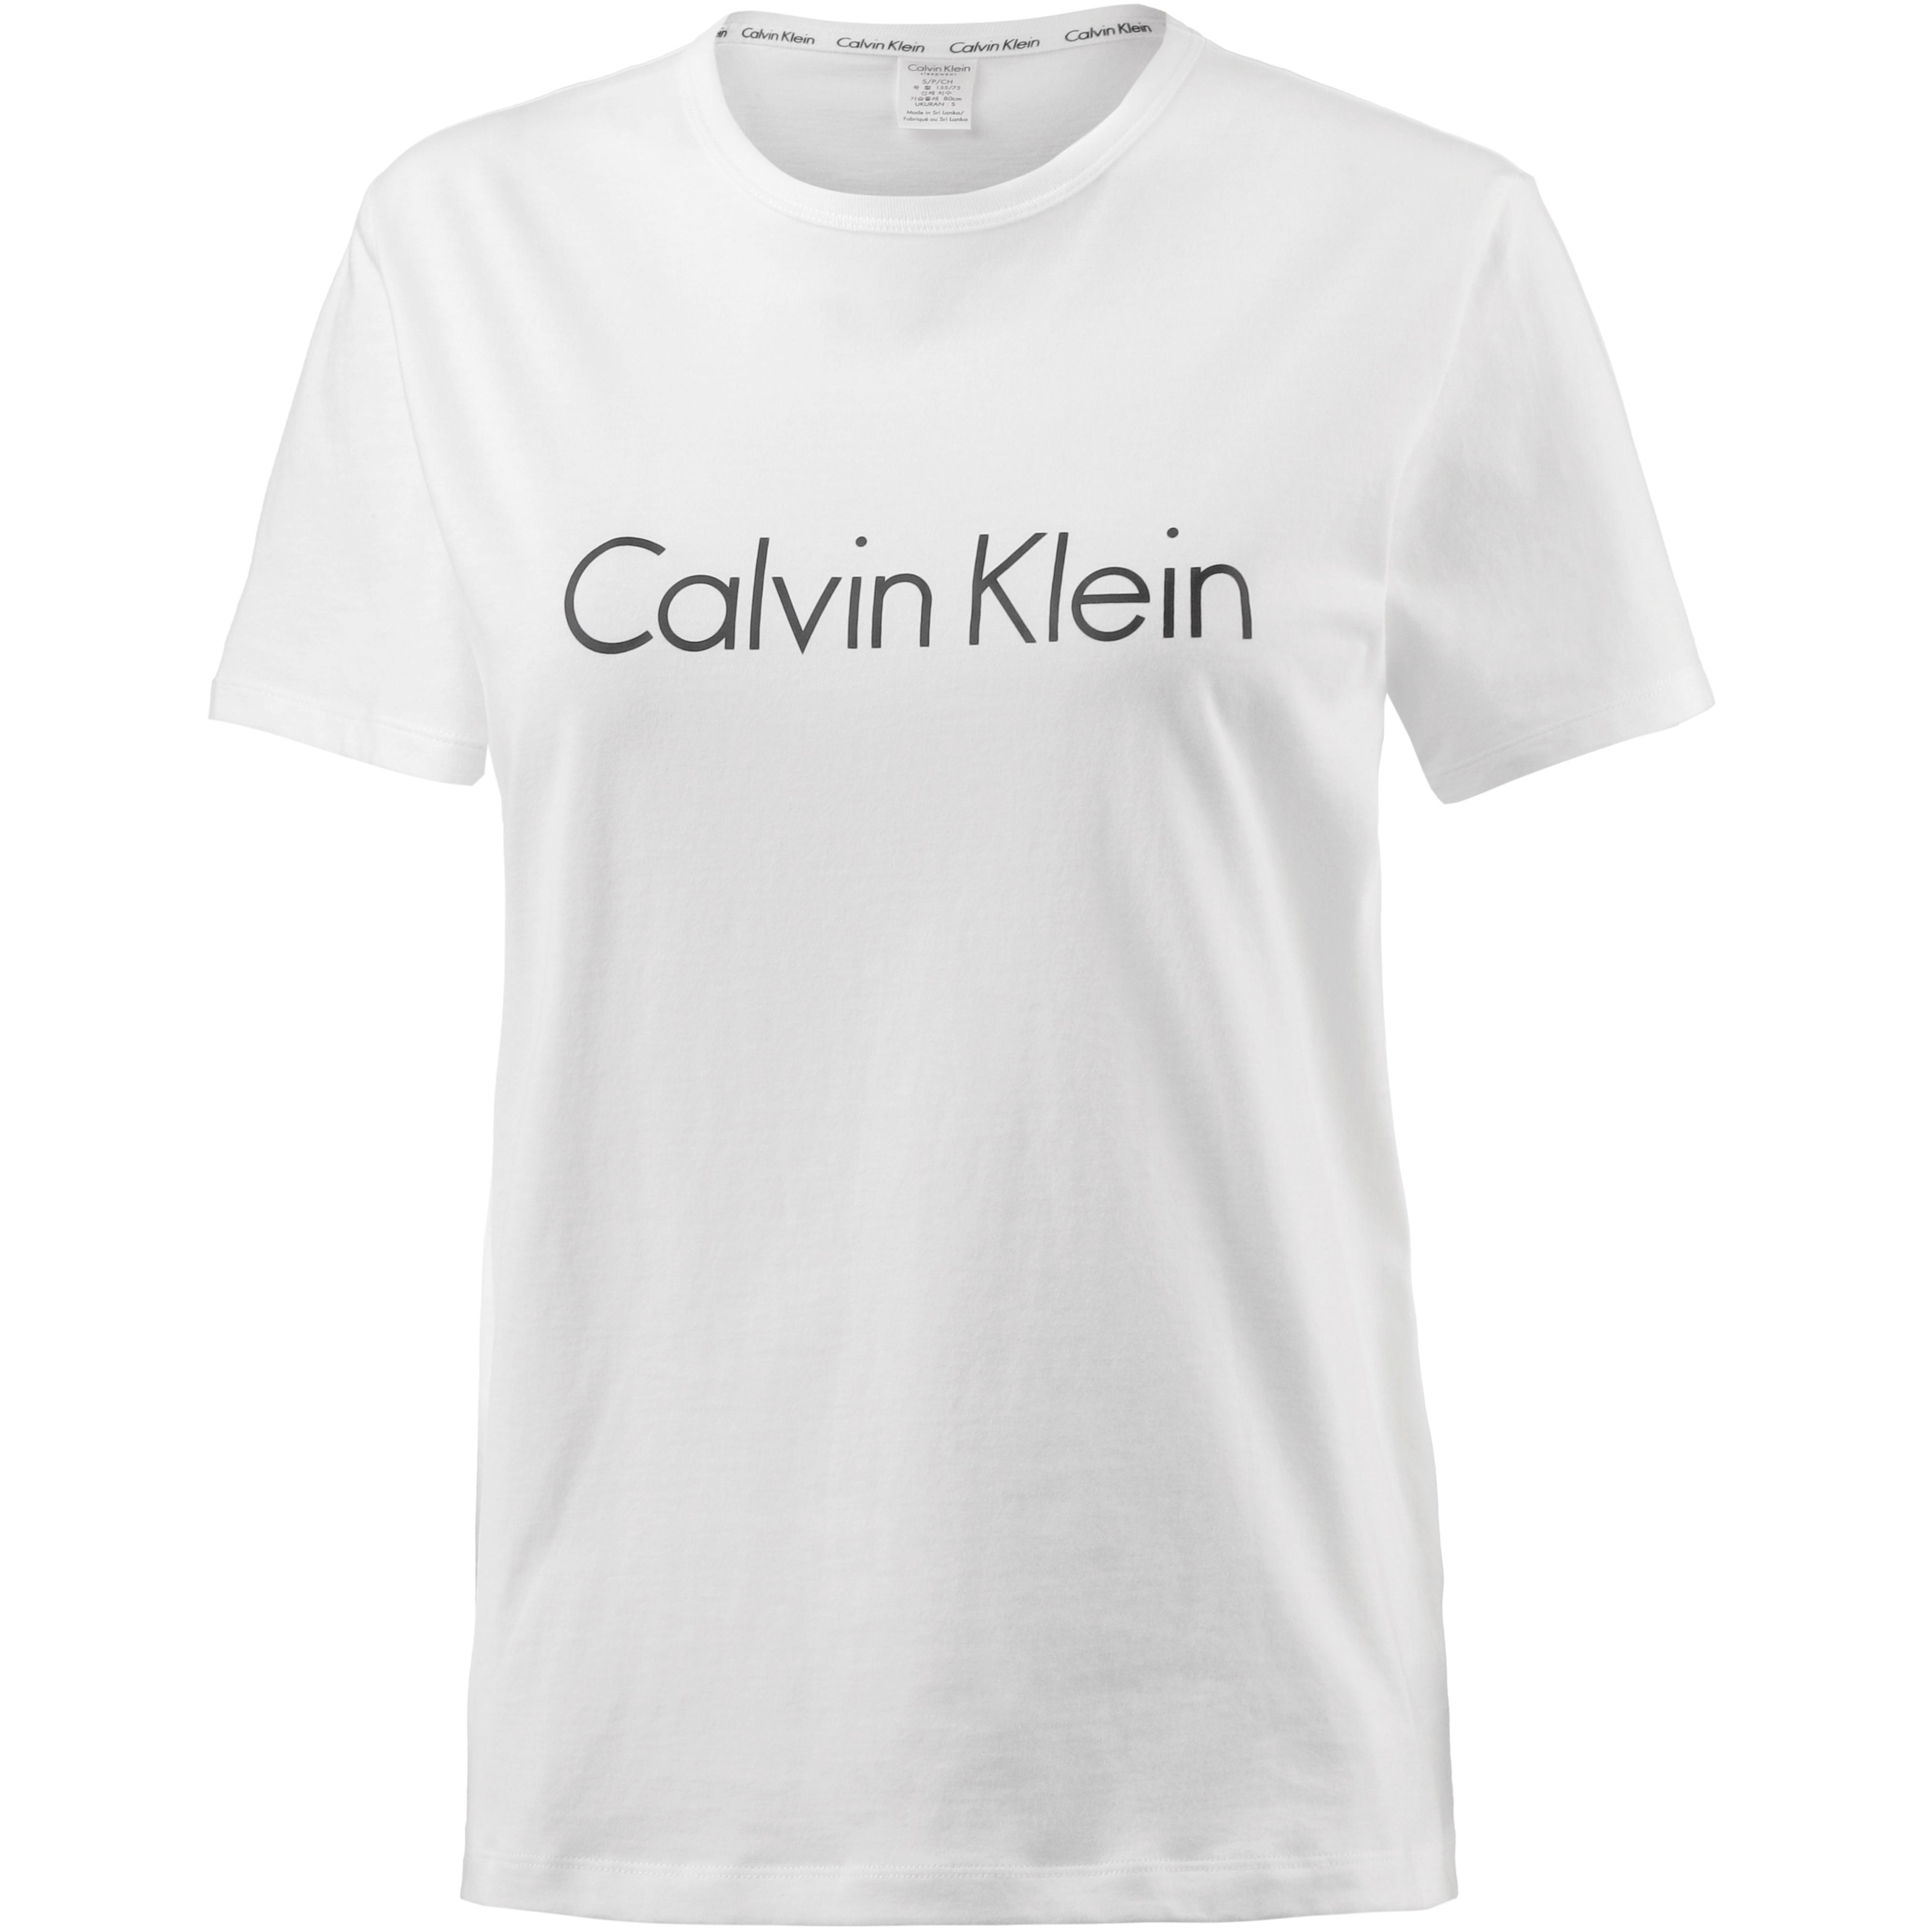 Image of Calvin Klein T-Shirt Damen